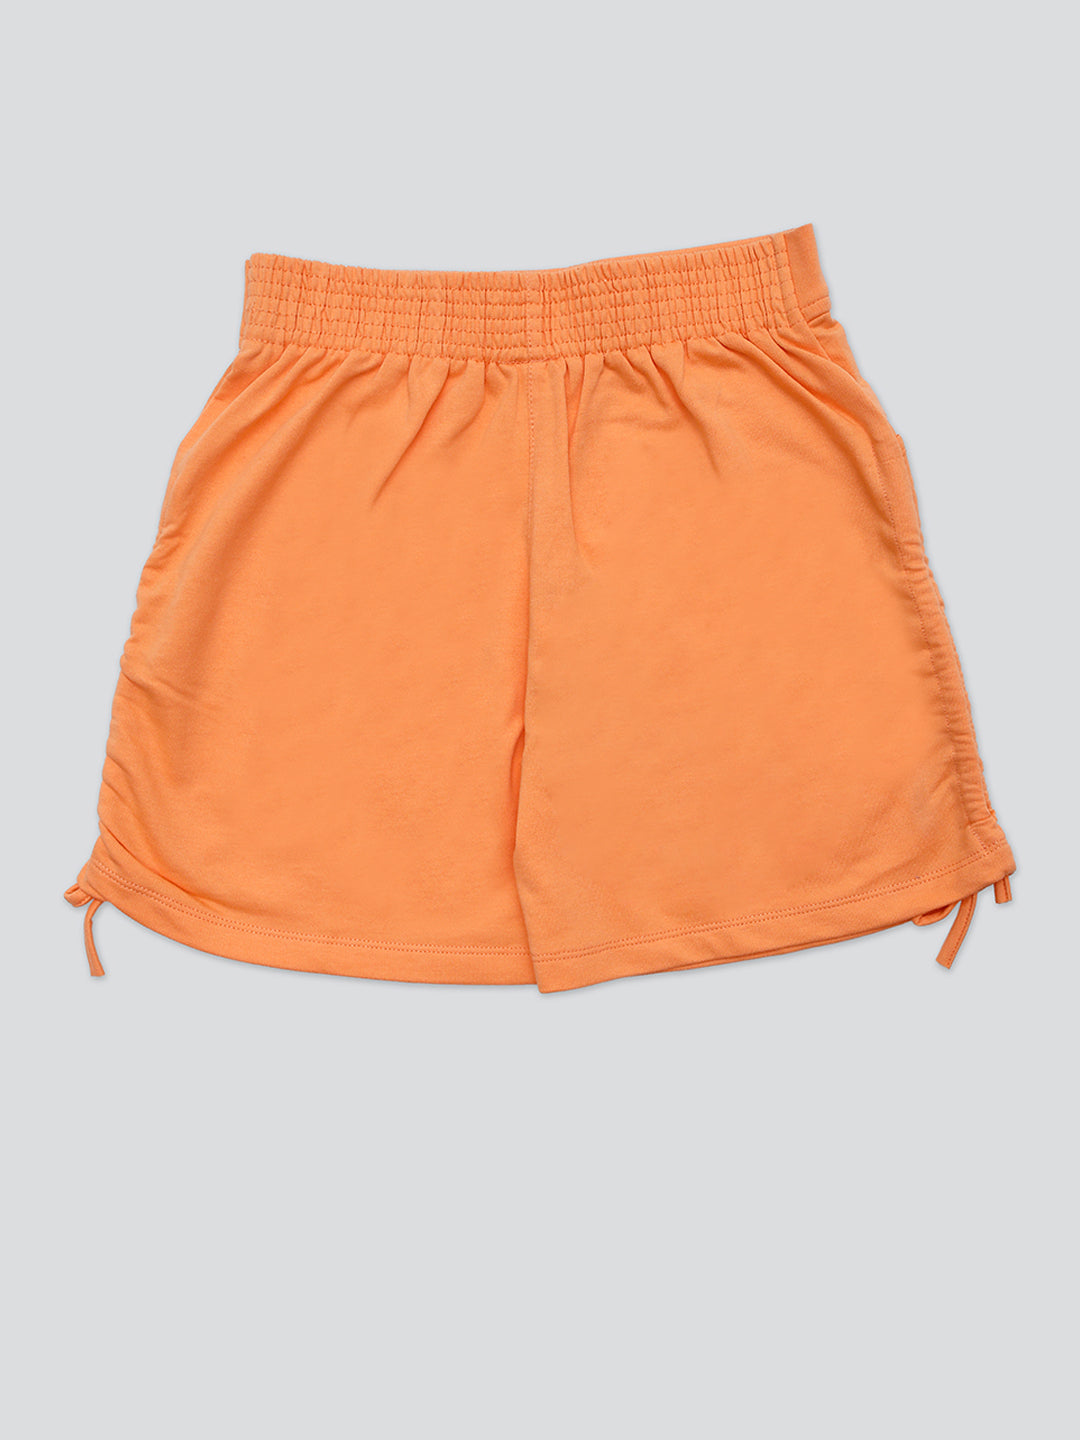 Pampolina Girls Solid Short- Orange